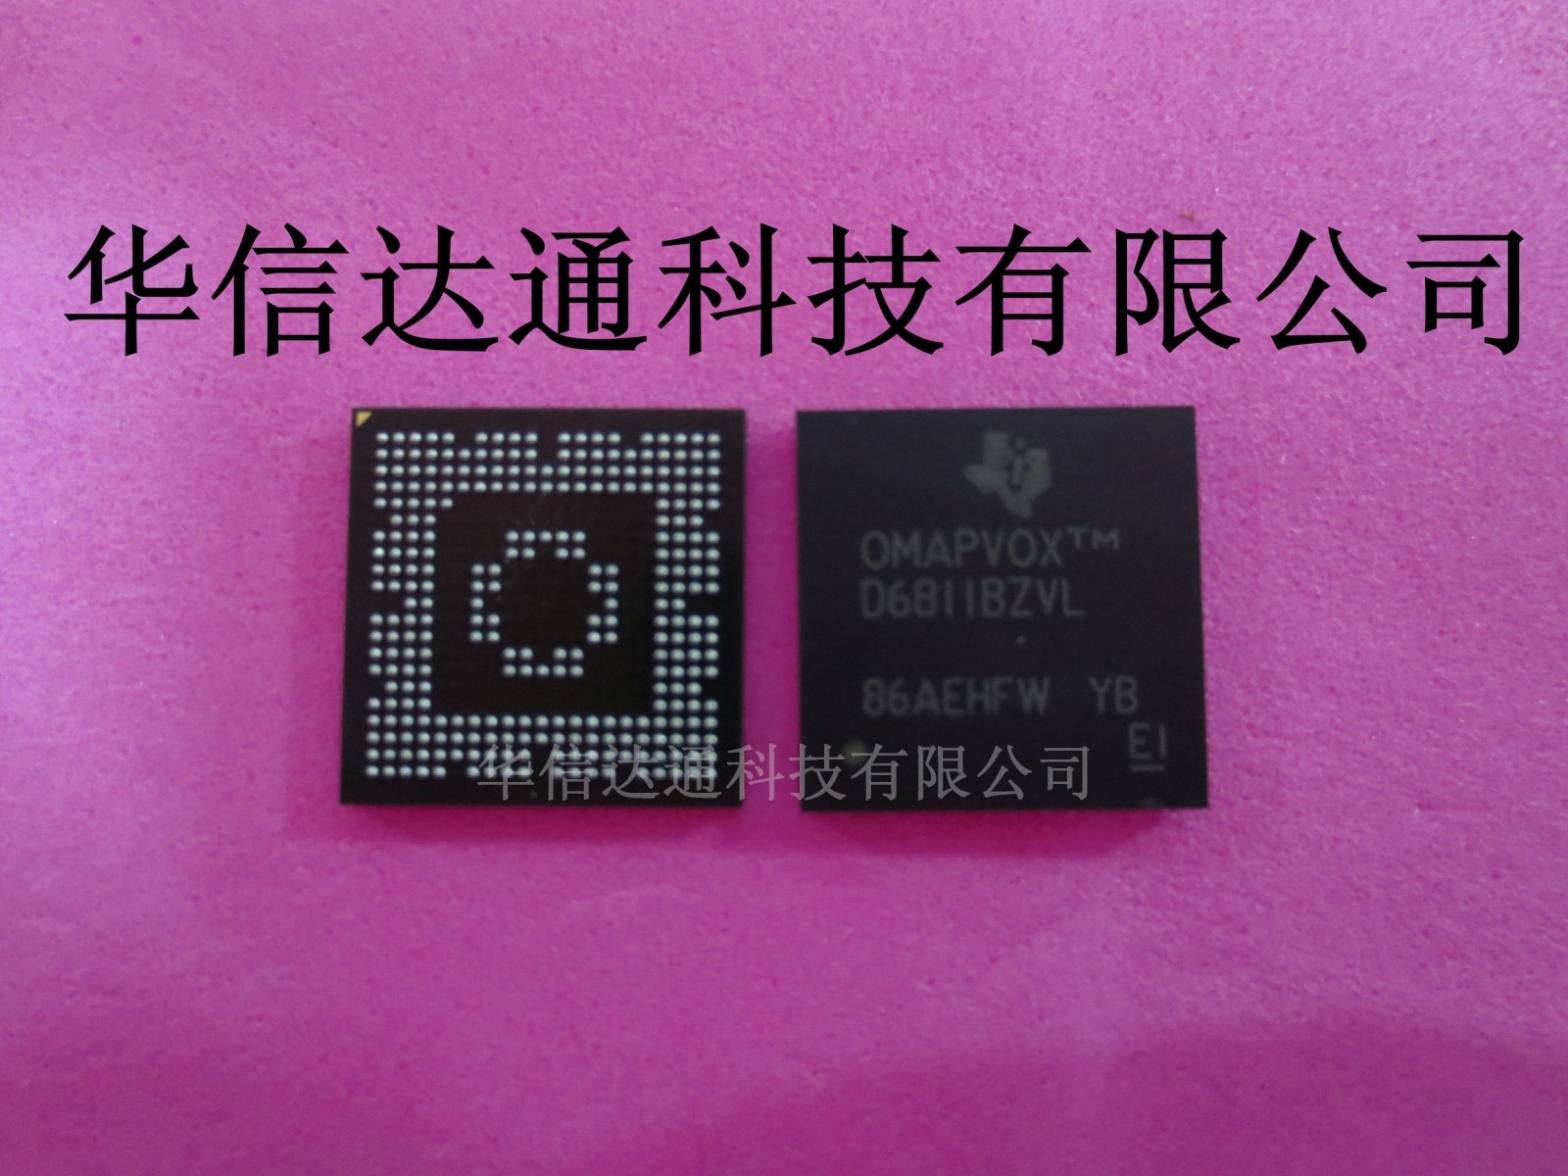  SA OMAPVOX D6811BZVL smartphone CPU CPU chip 10pcs lot